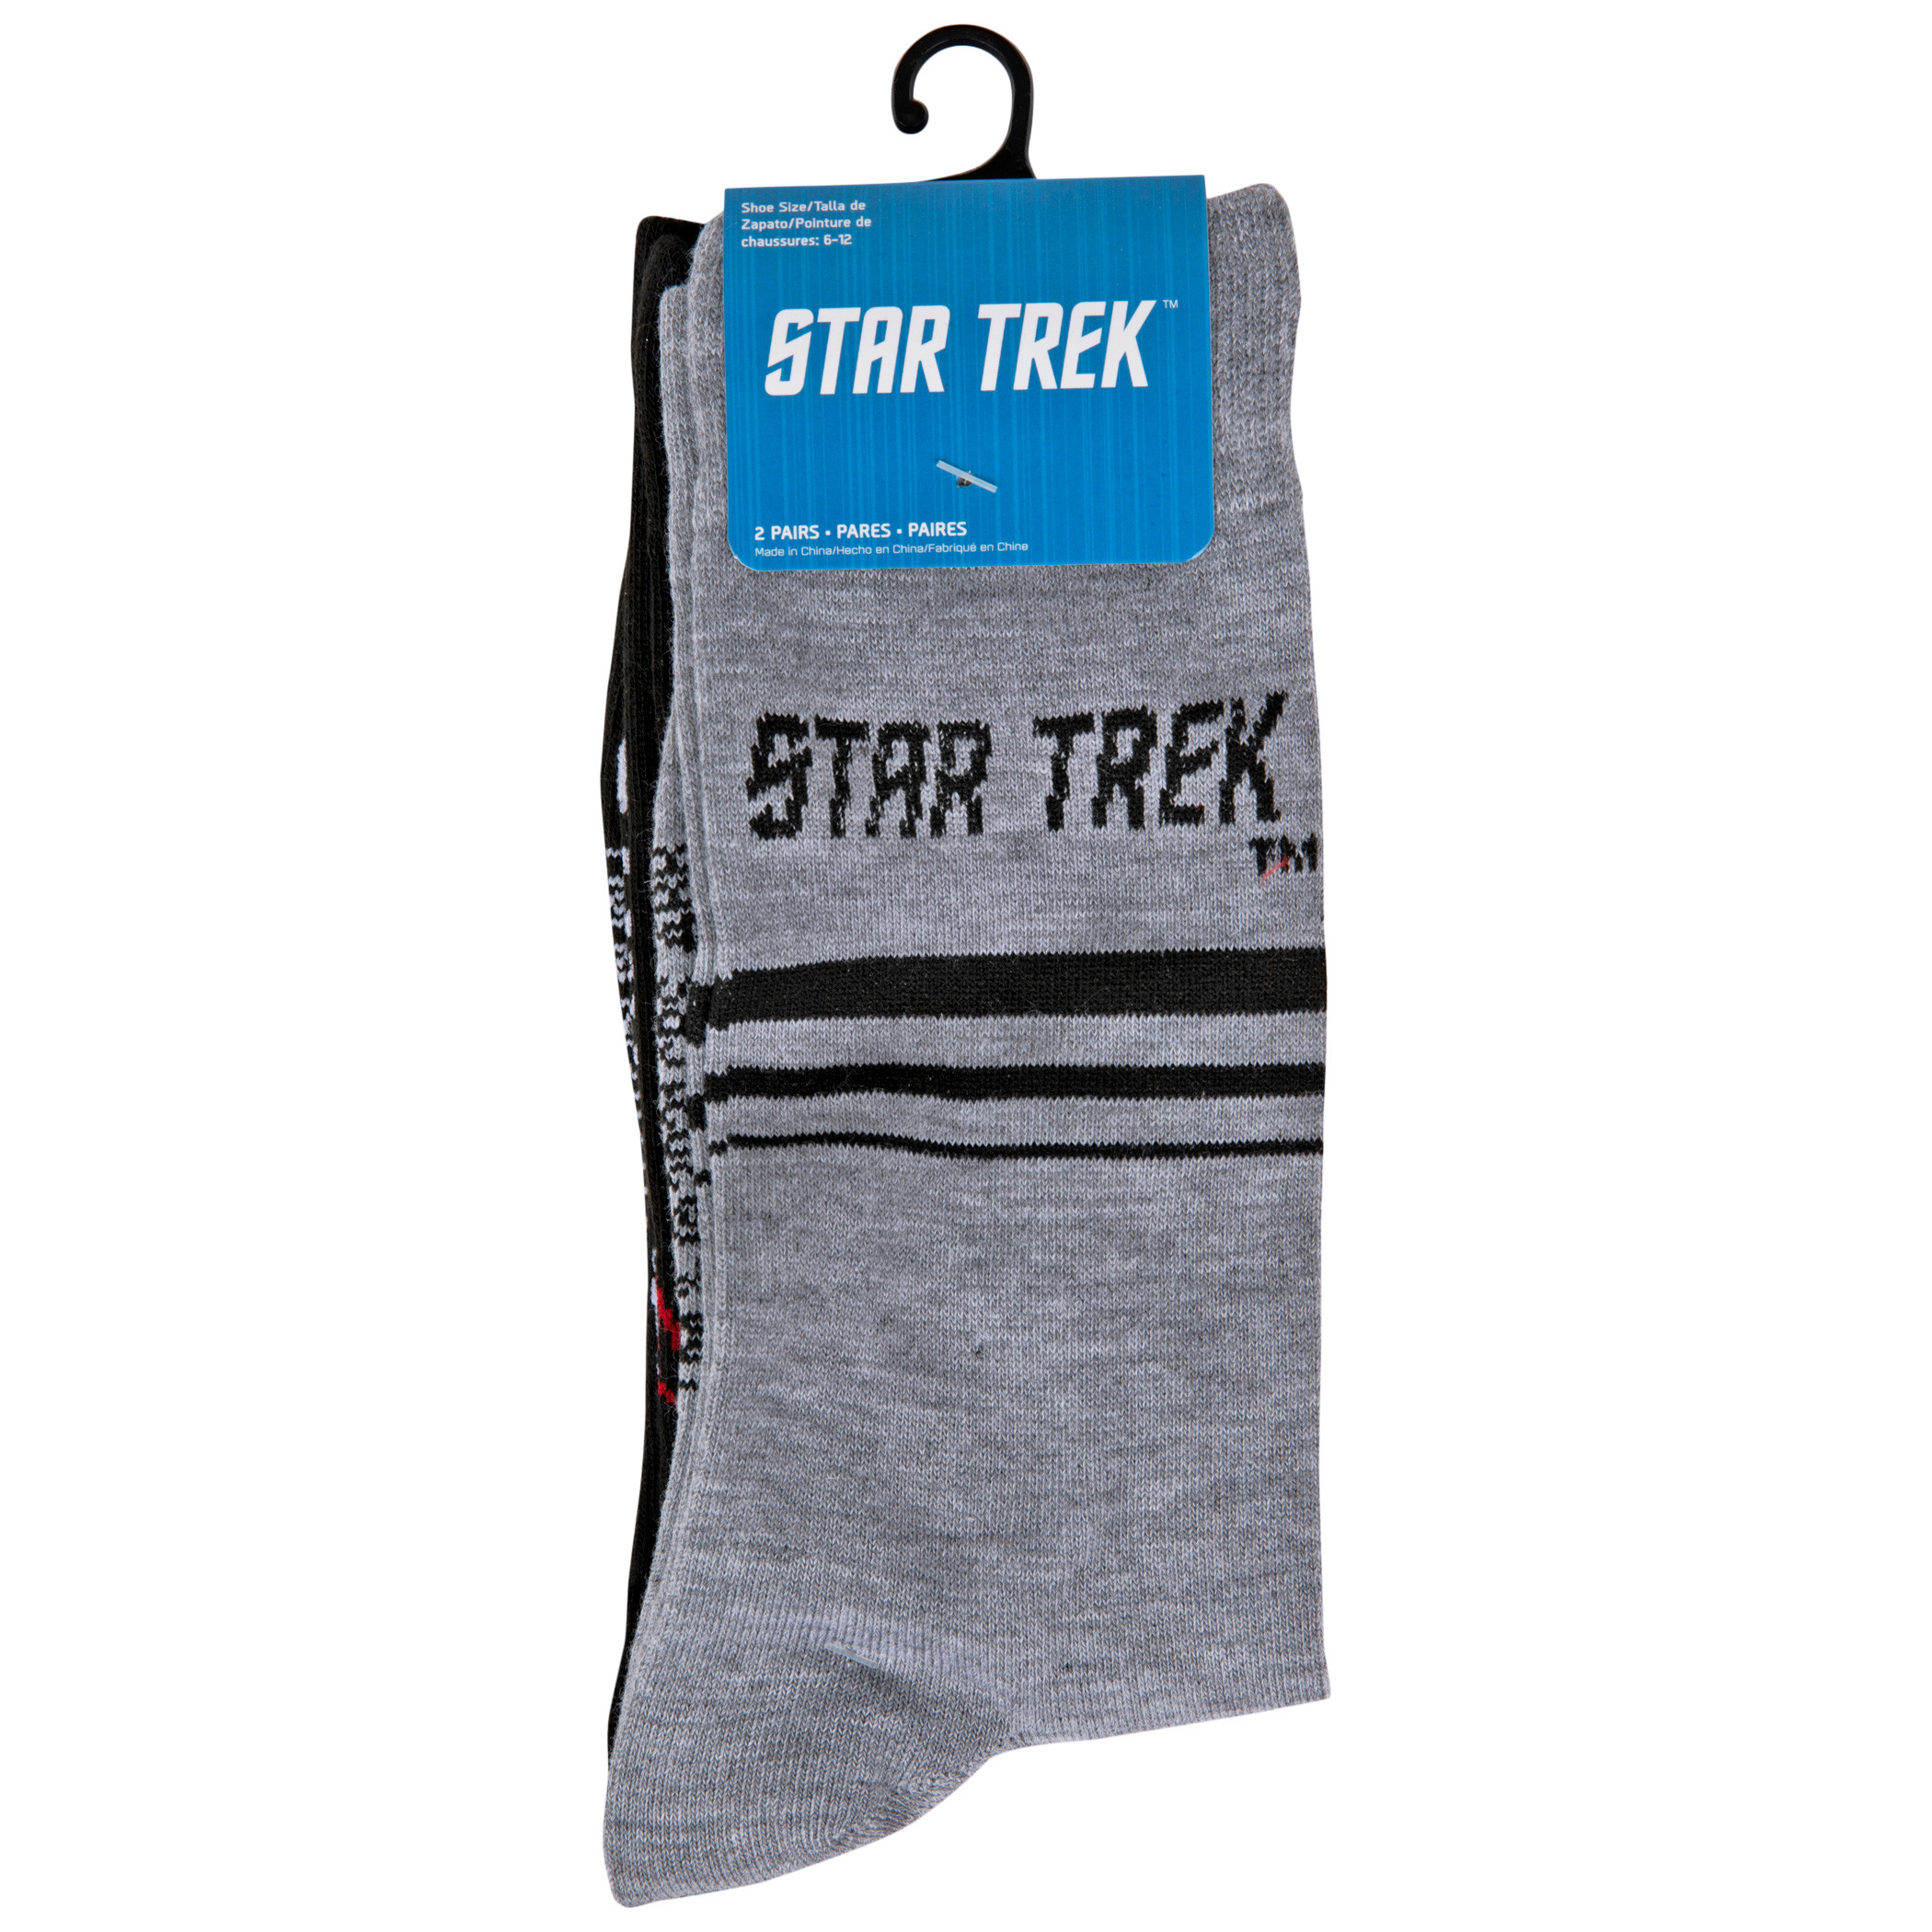 Star Trek Logo & Multicolor Emblem Crew Socks 2-Pack